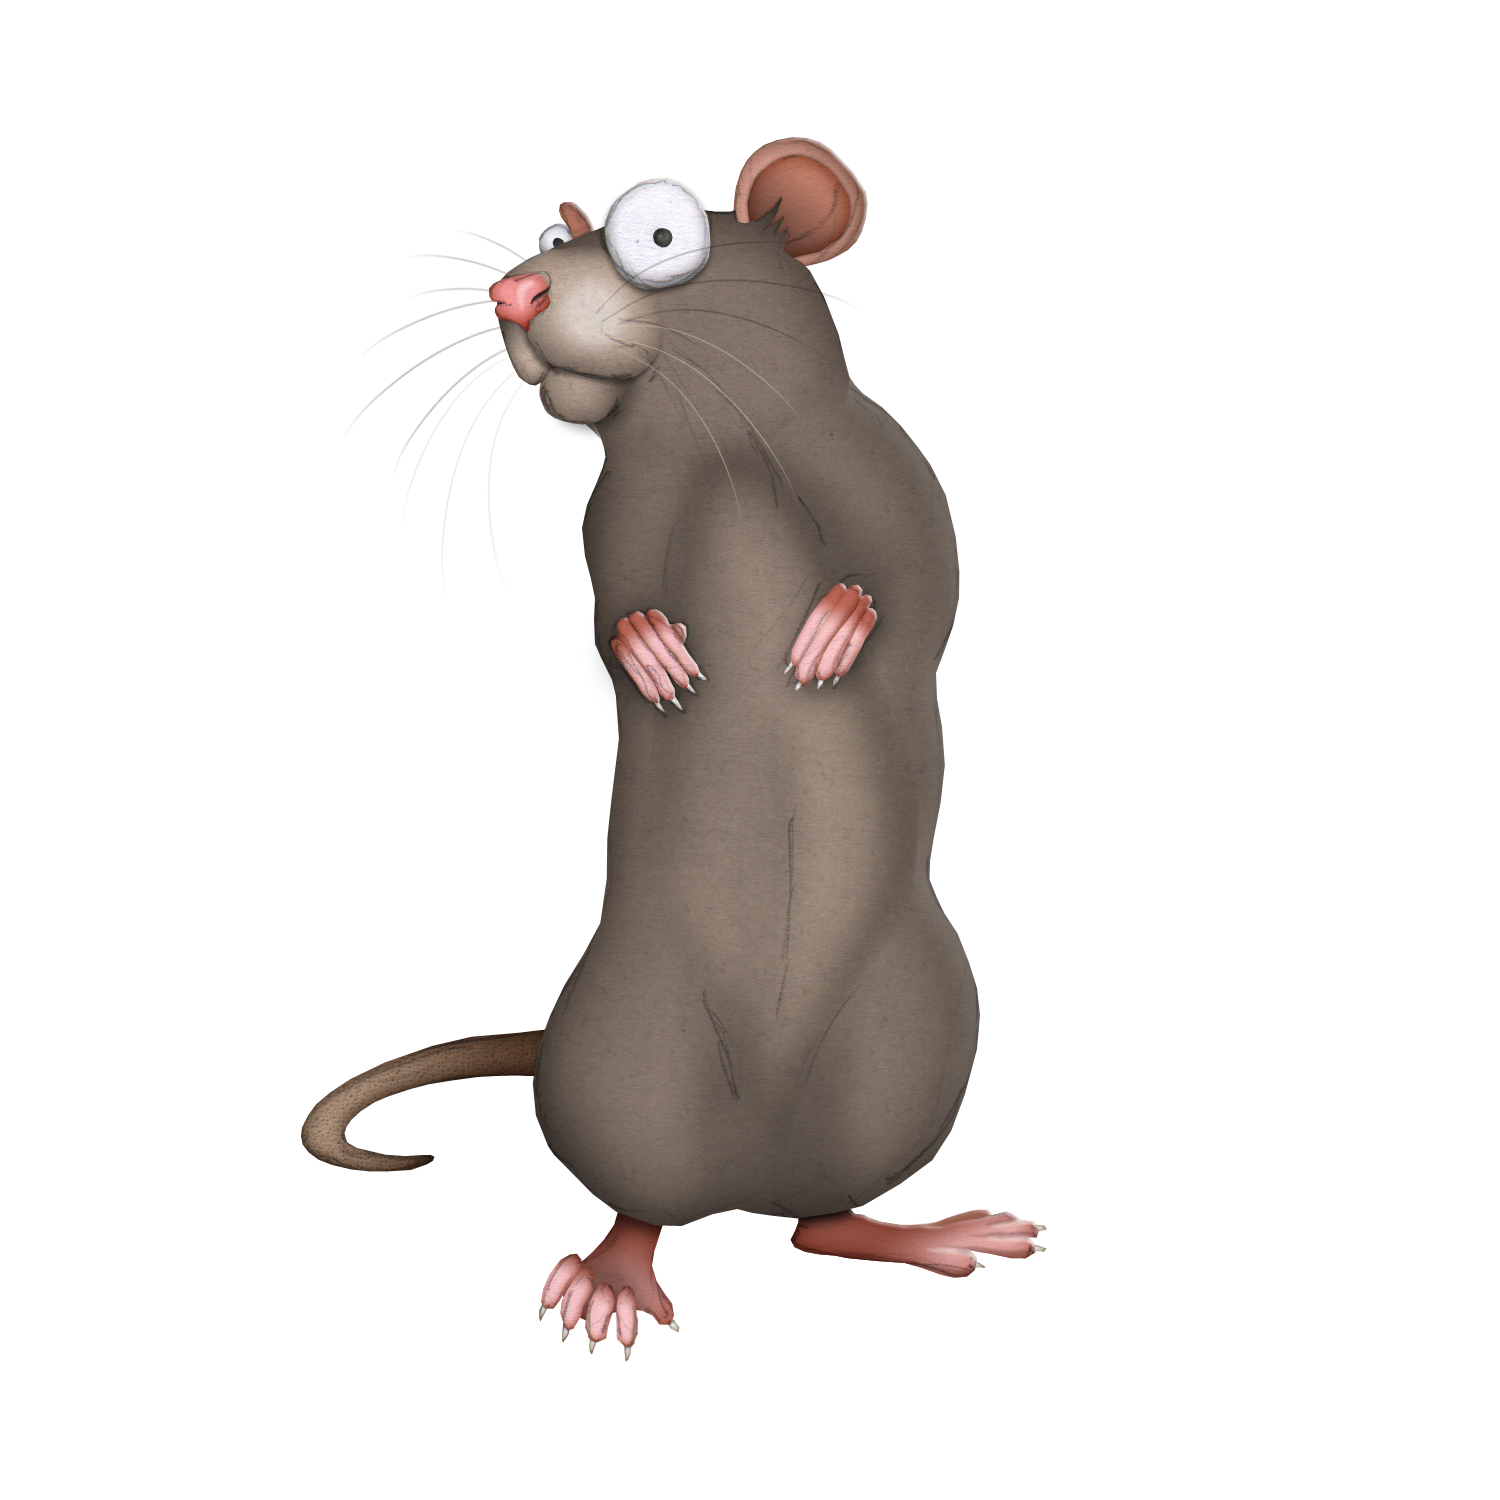 Rowan the Rat